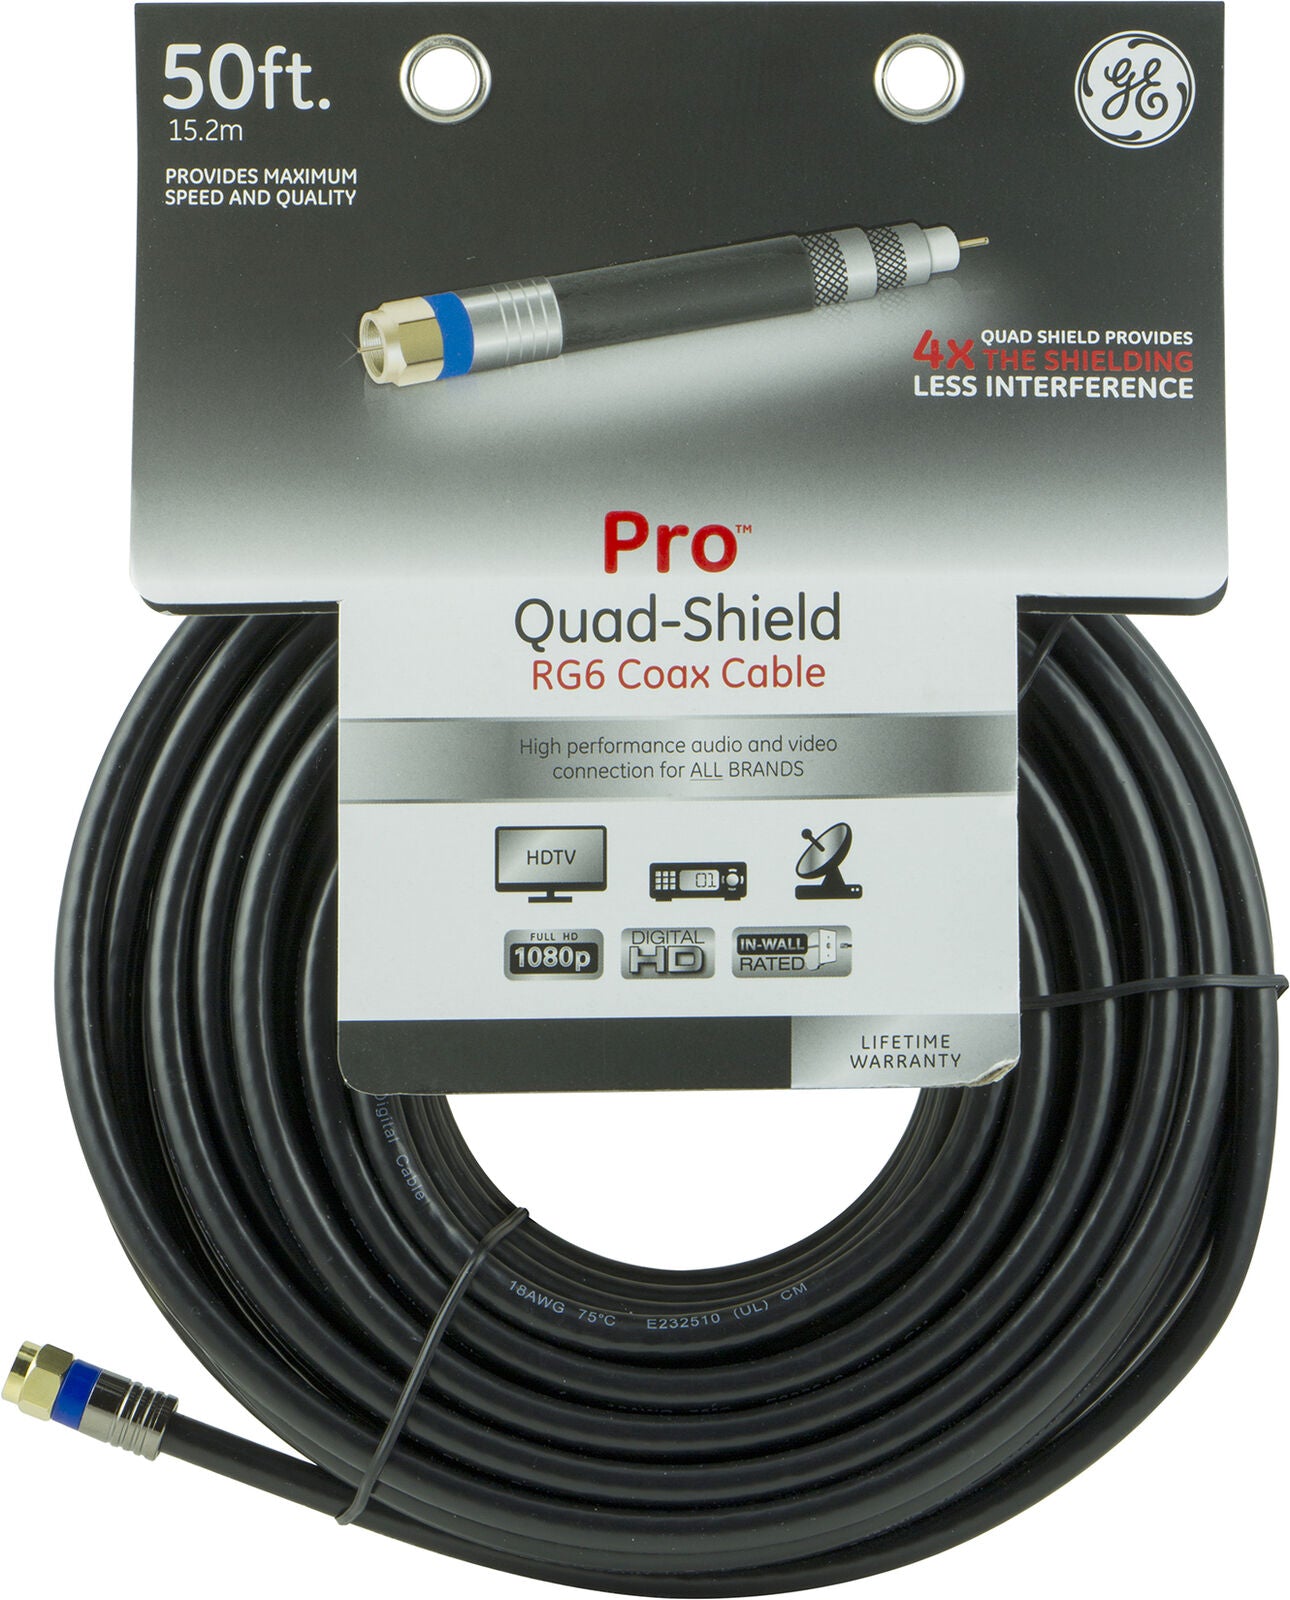 GE 33532 Pro Quad-Shield RG6 Coax Cable, 50ft - Black